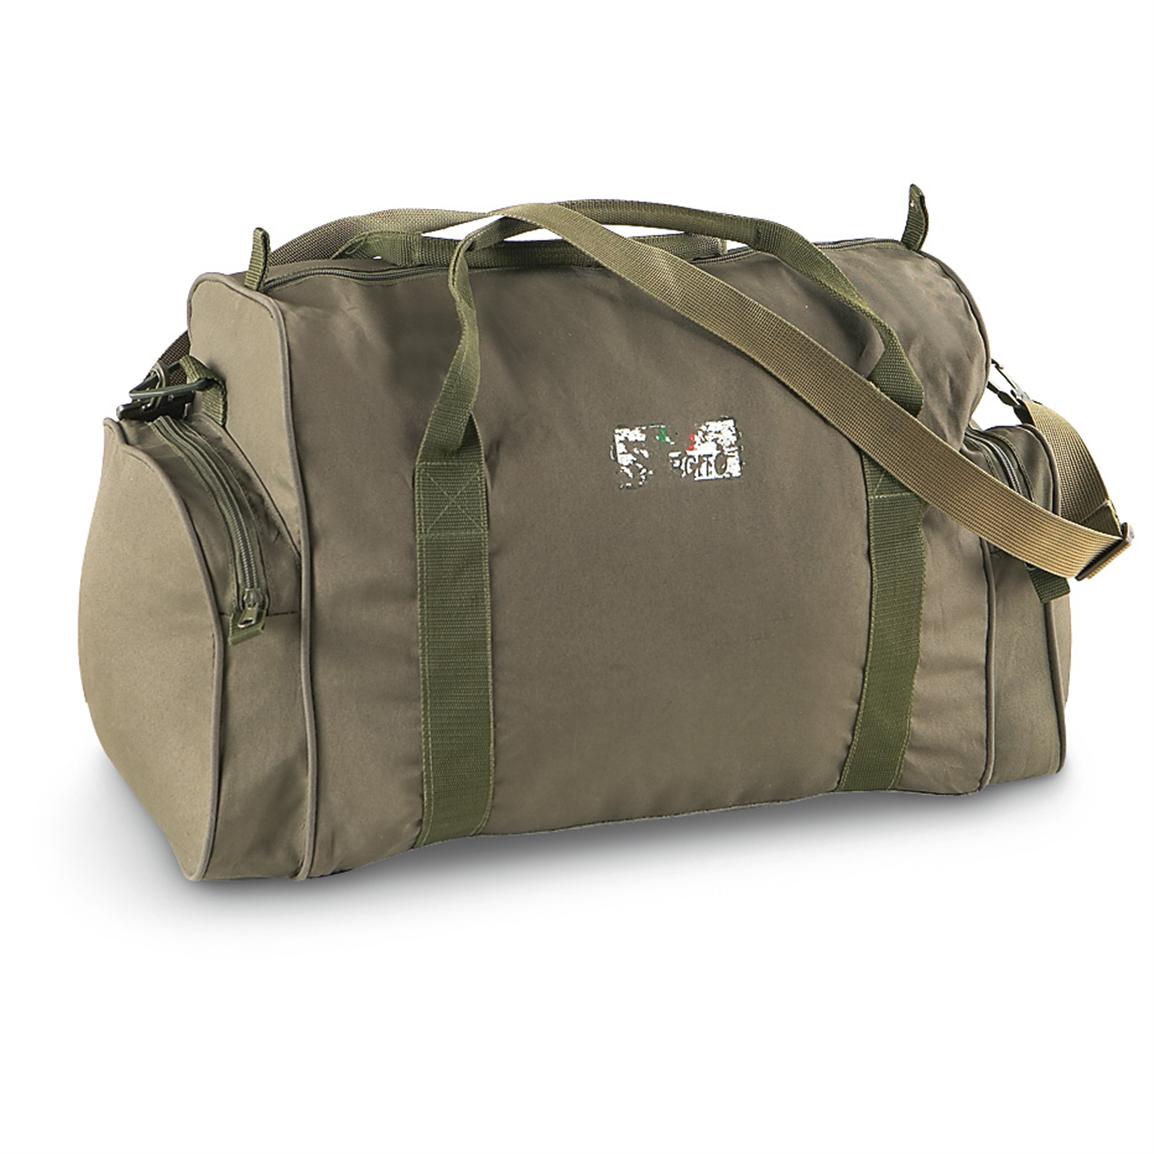 Used Italian Military Duffel Bag, Olive Drab - 156865, Military & Camo Duffle Bags at Sportsman ...